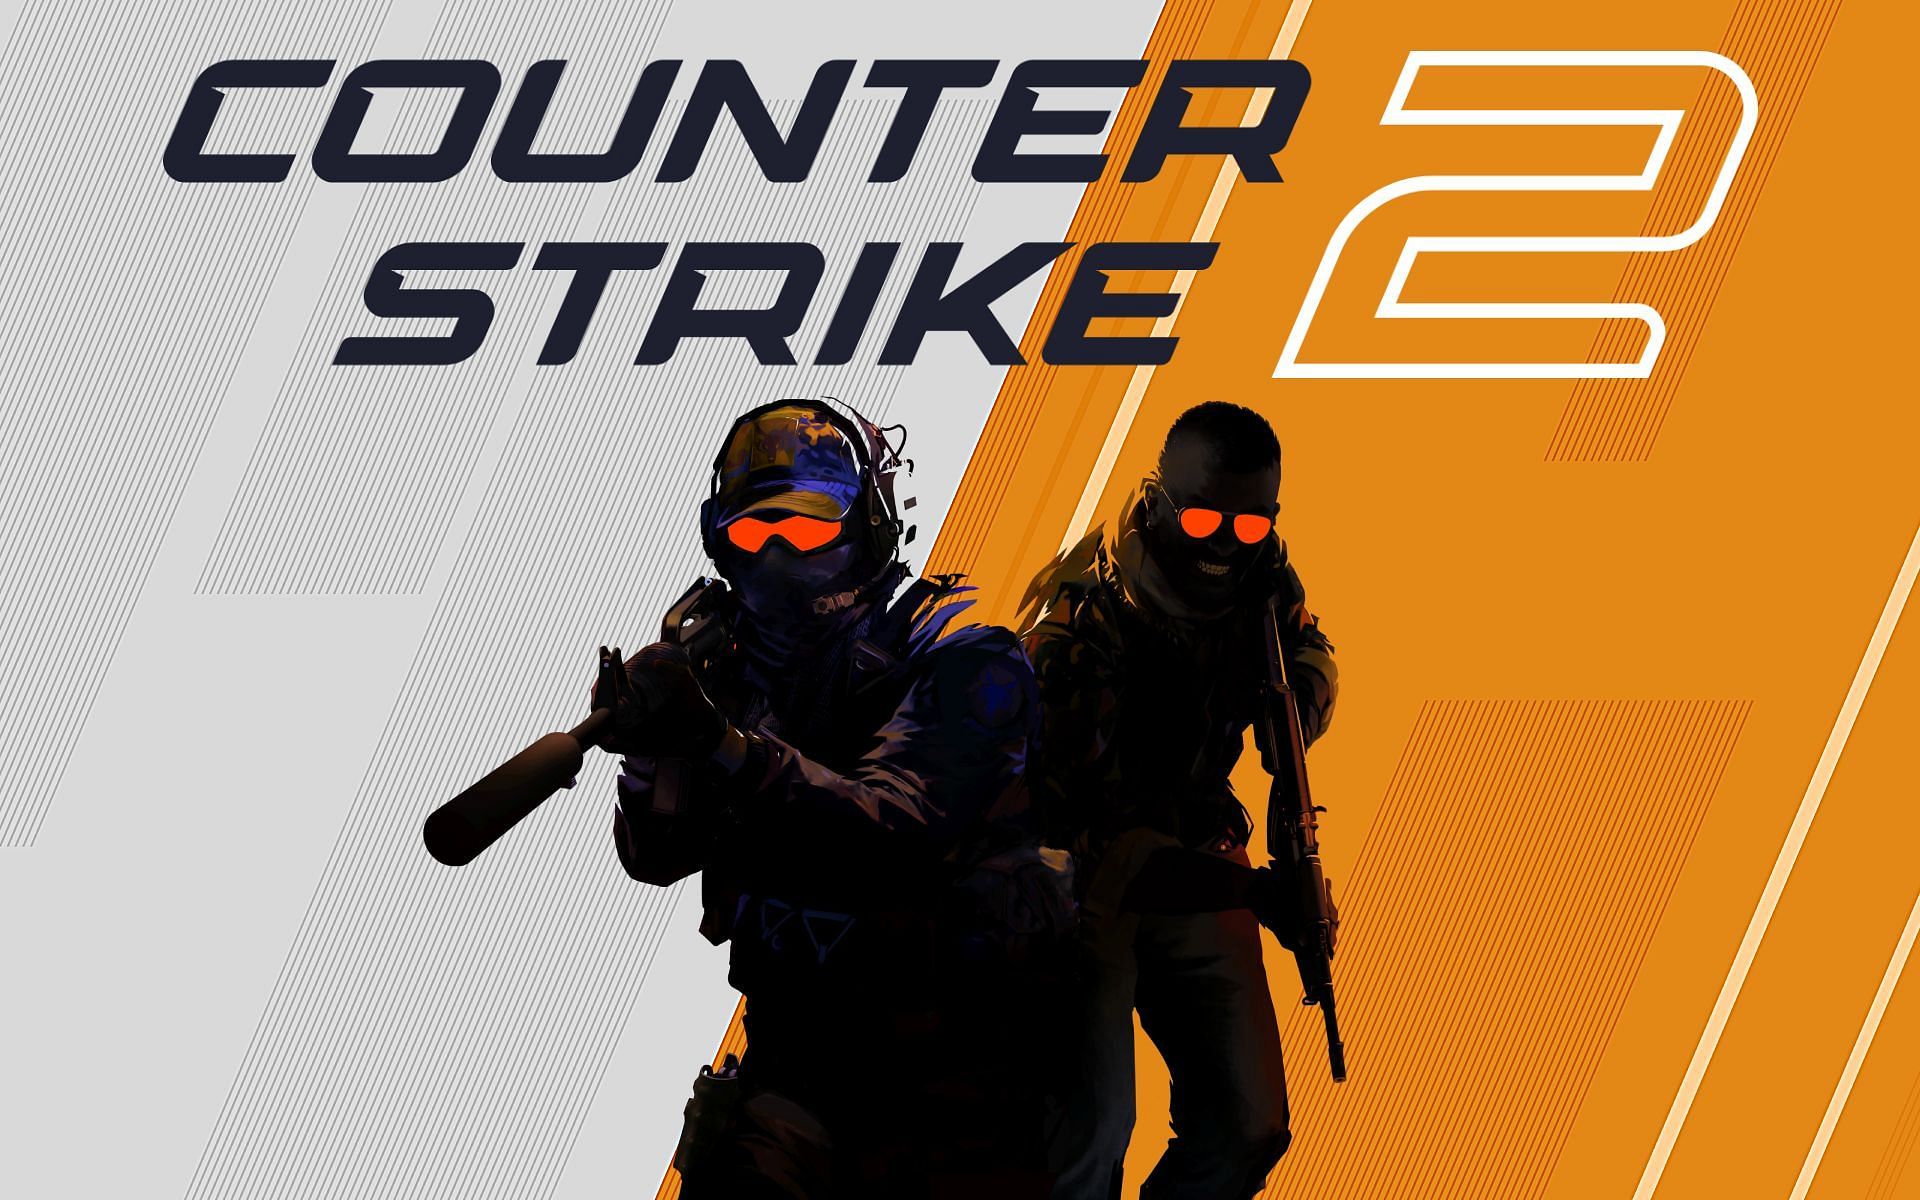 Main menu - Counter-Strike: Global Offensive